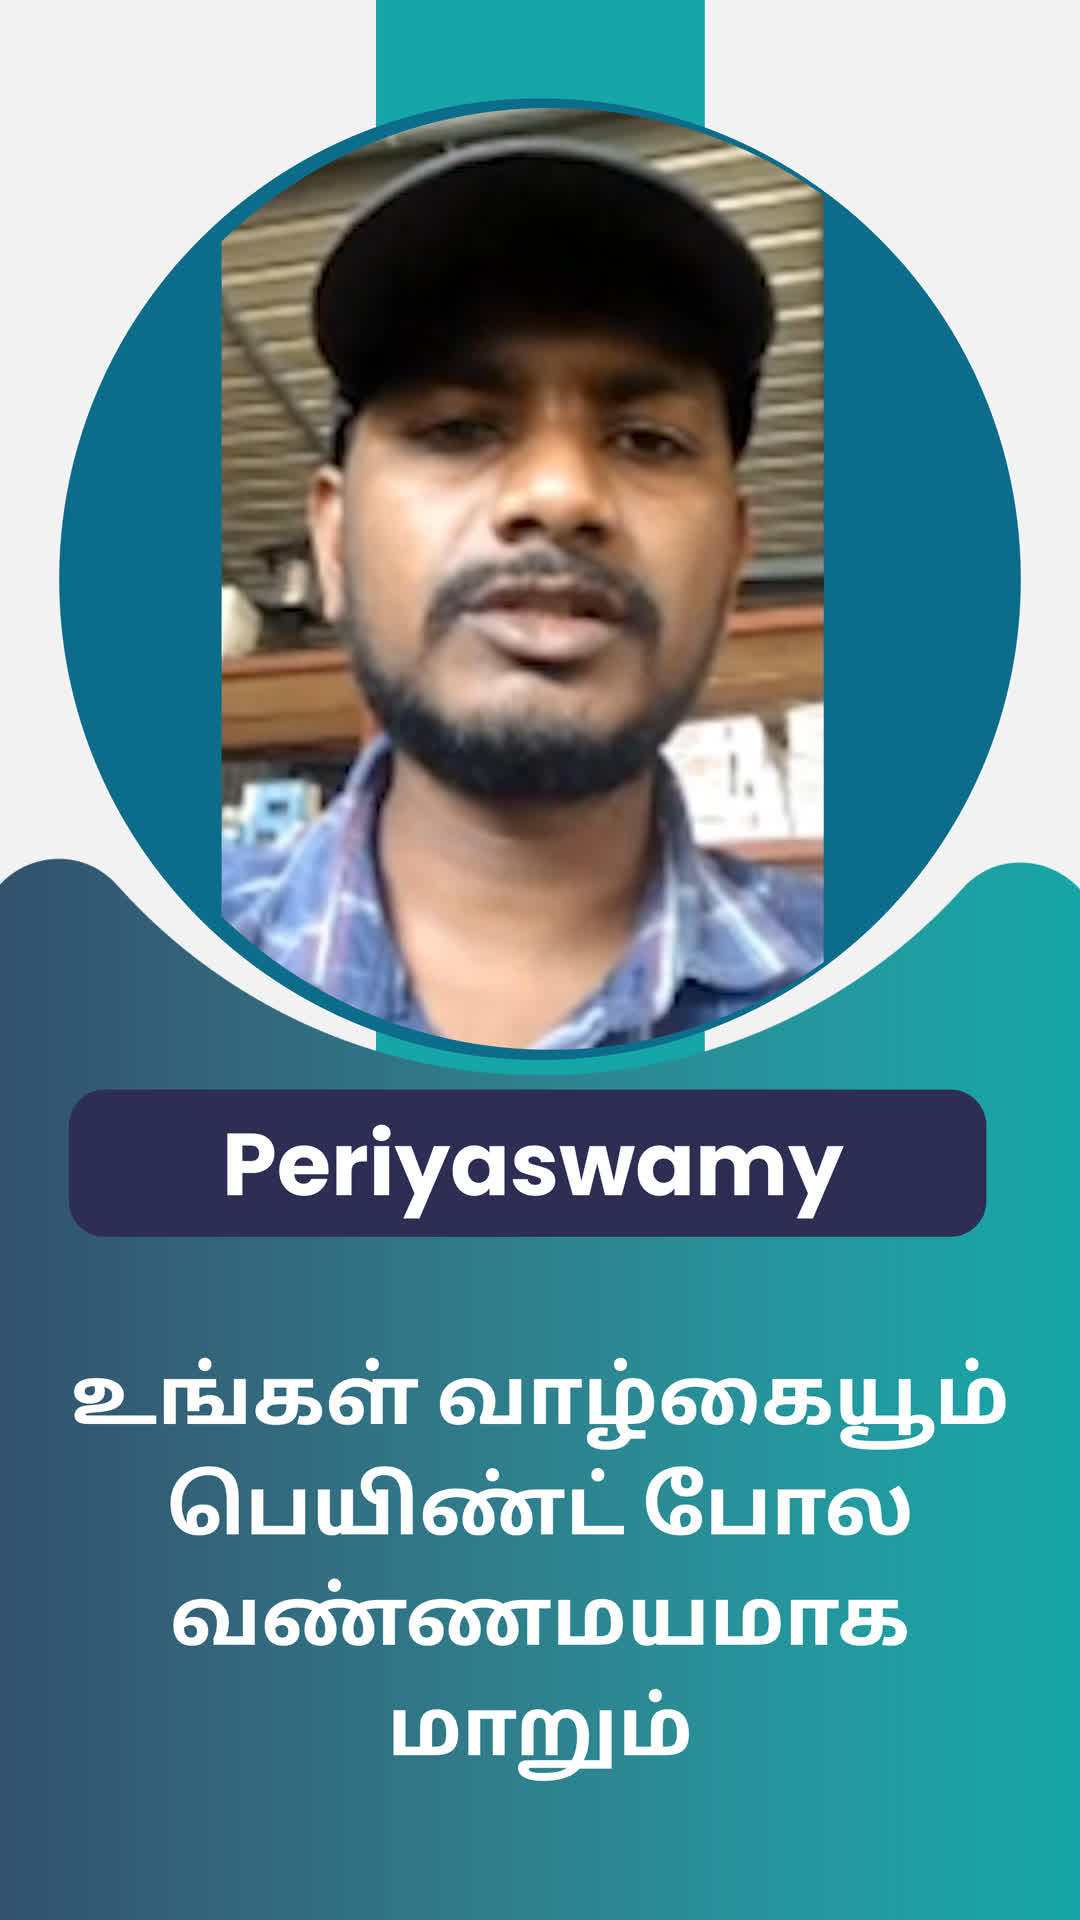 Periyasamy M's Honest Review of ffreedom app - Salem ,Tamil Nadu